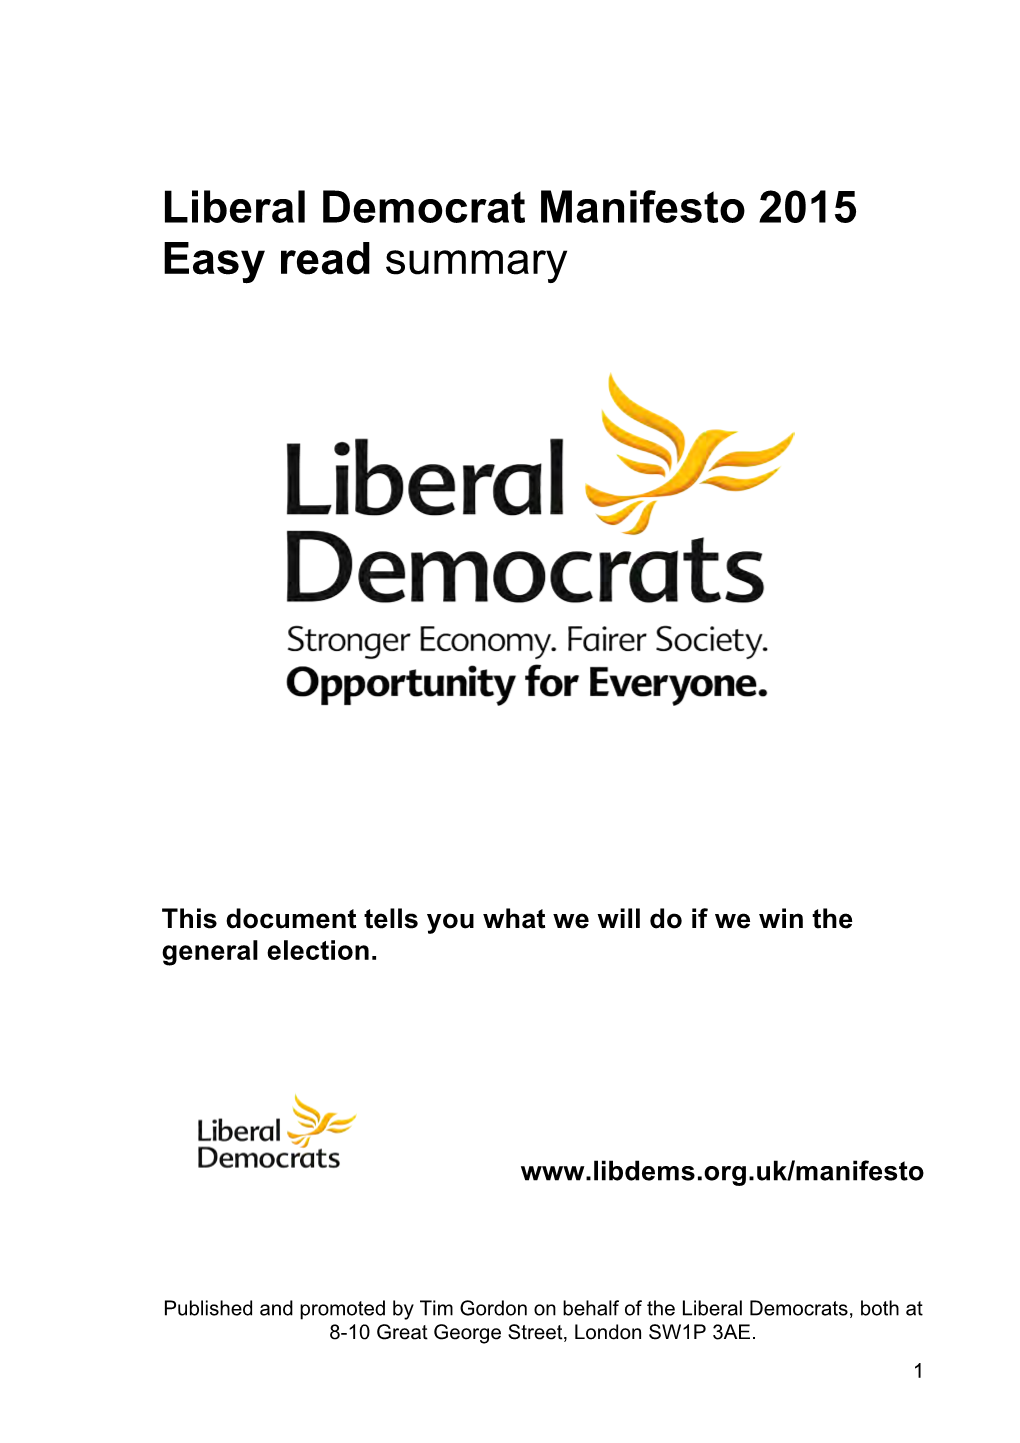 Liberal Democrat Manifesto 2015 Easy Read Summary